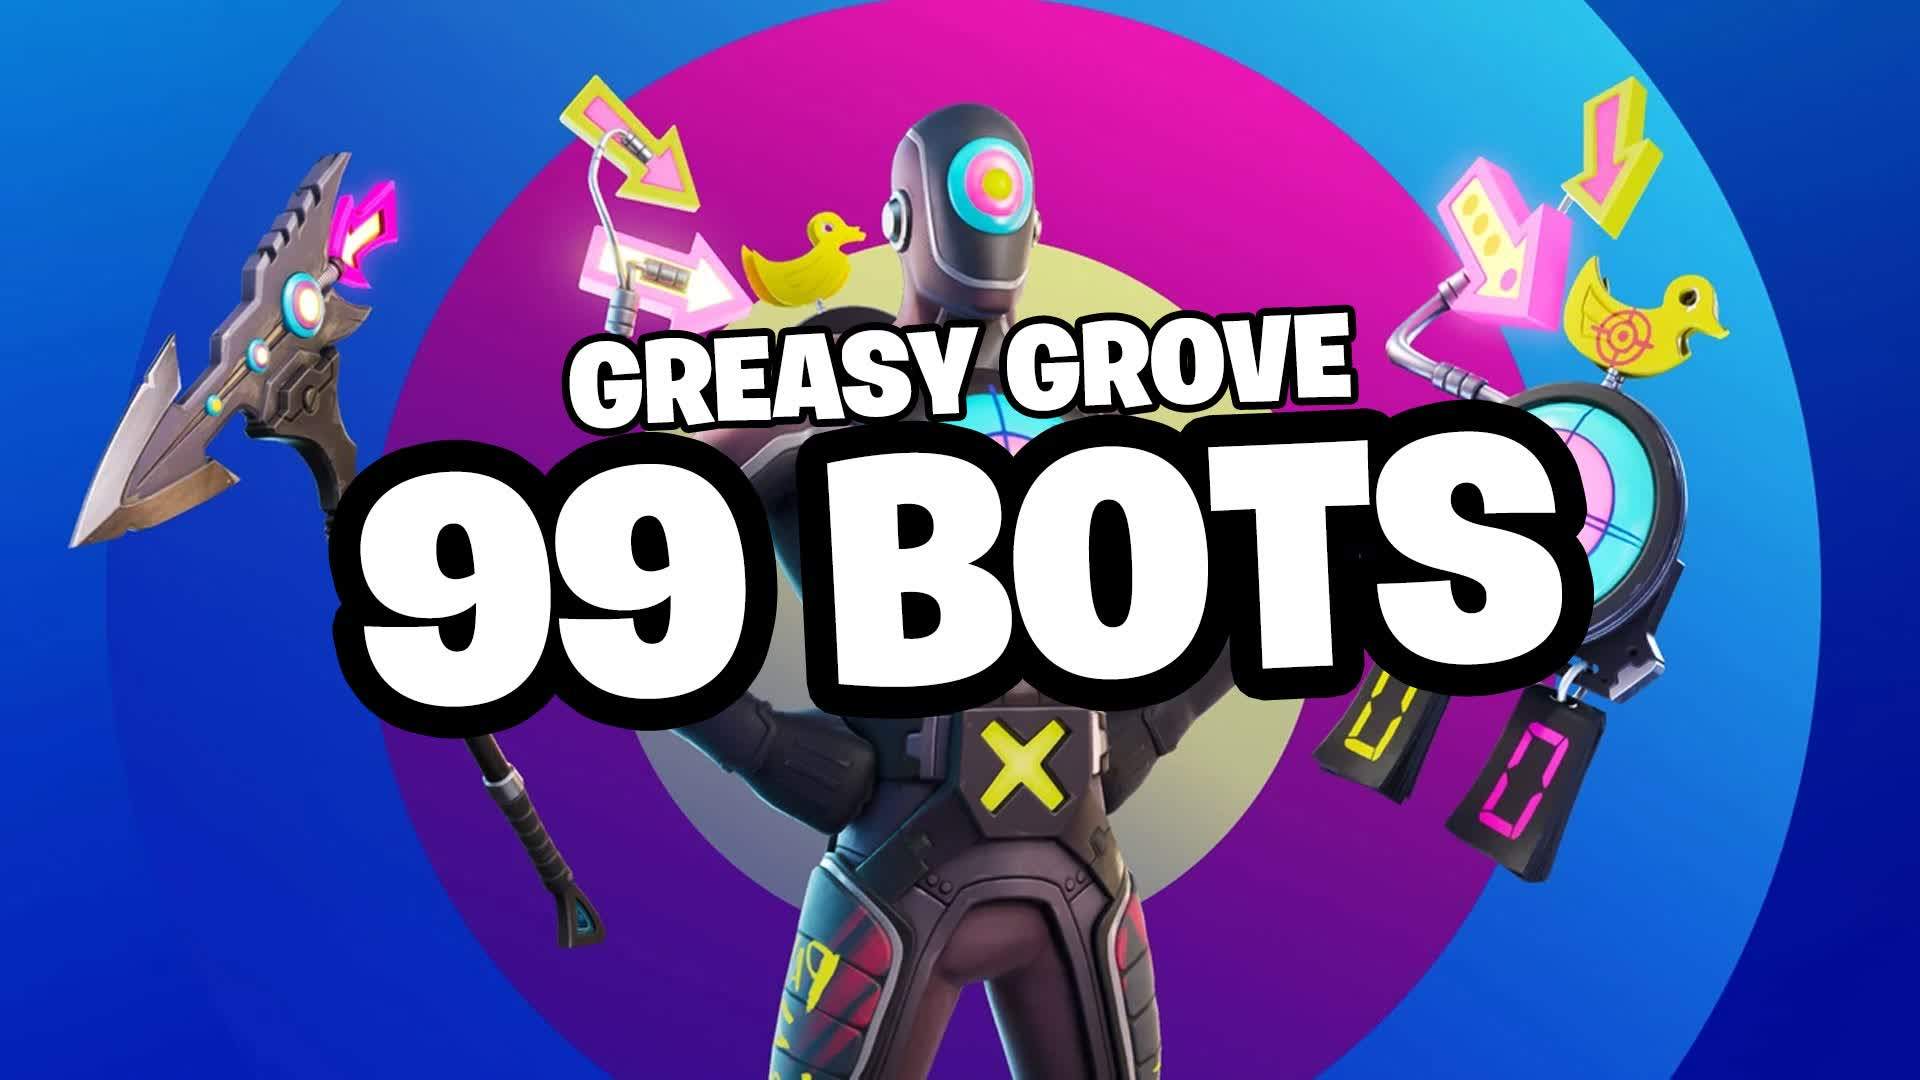 AI Bot Practice: Greasy Grove - 99 BOTS